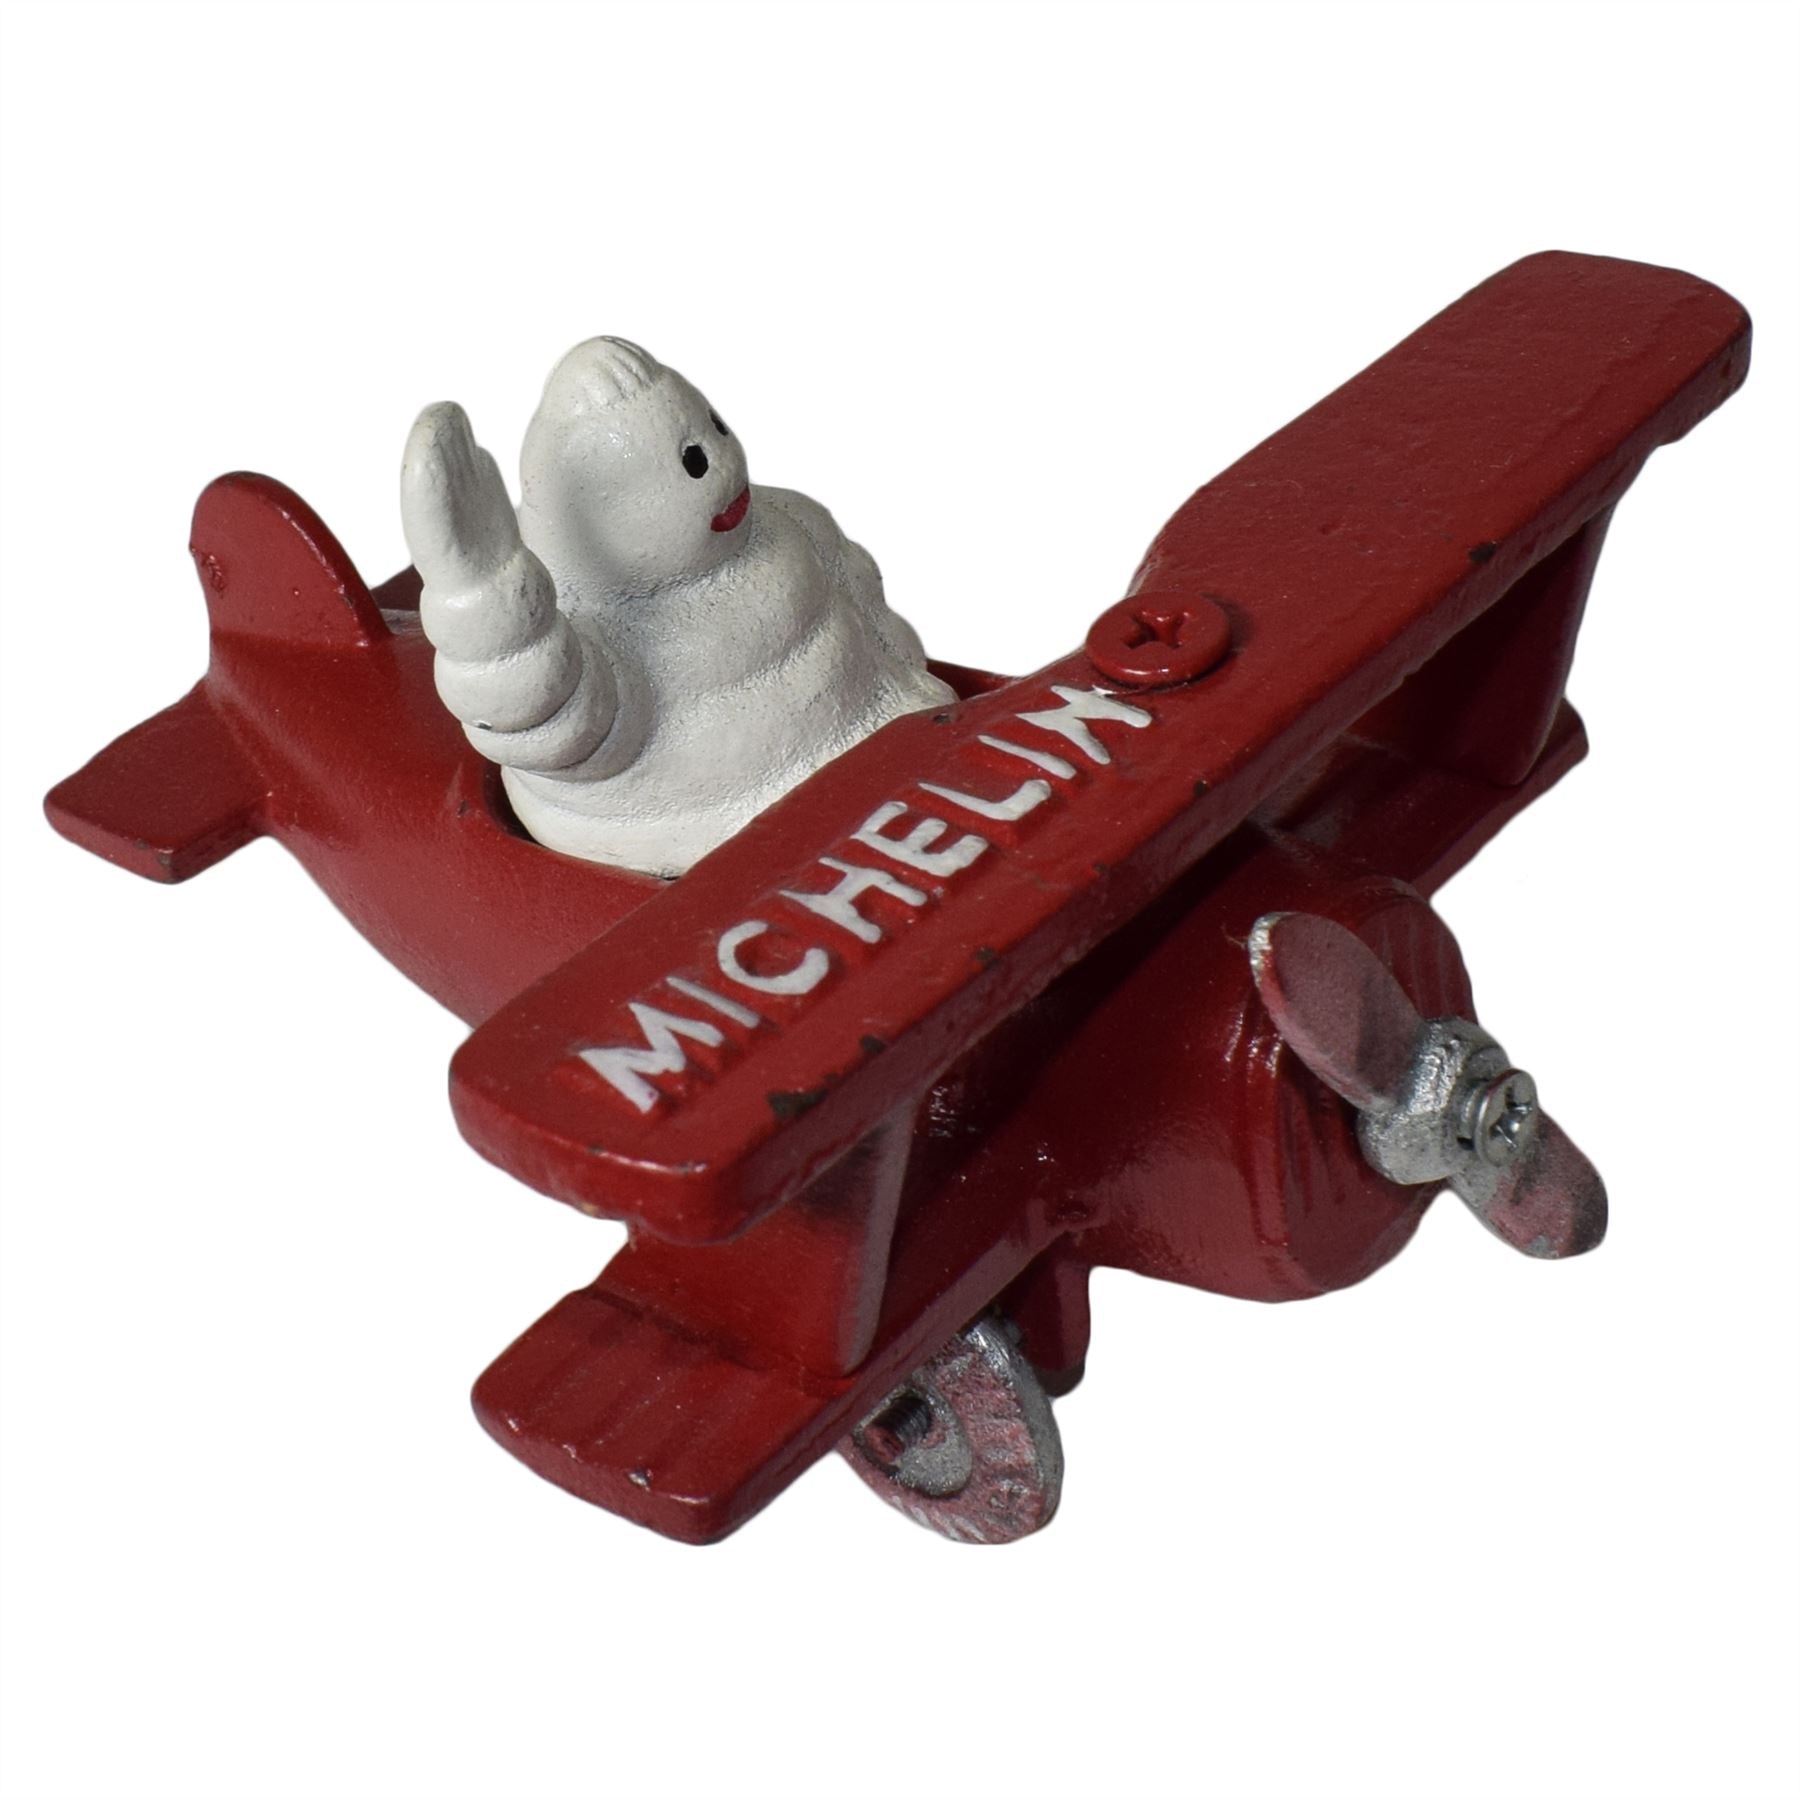 Michelin Man in Plane & Tractor Figure Mascot Statue Bibendum Figurine Cast Iron